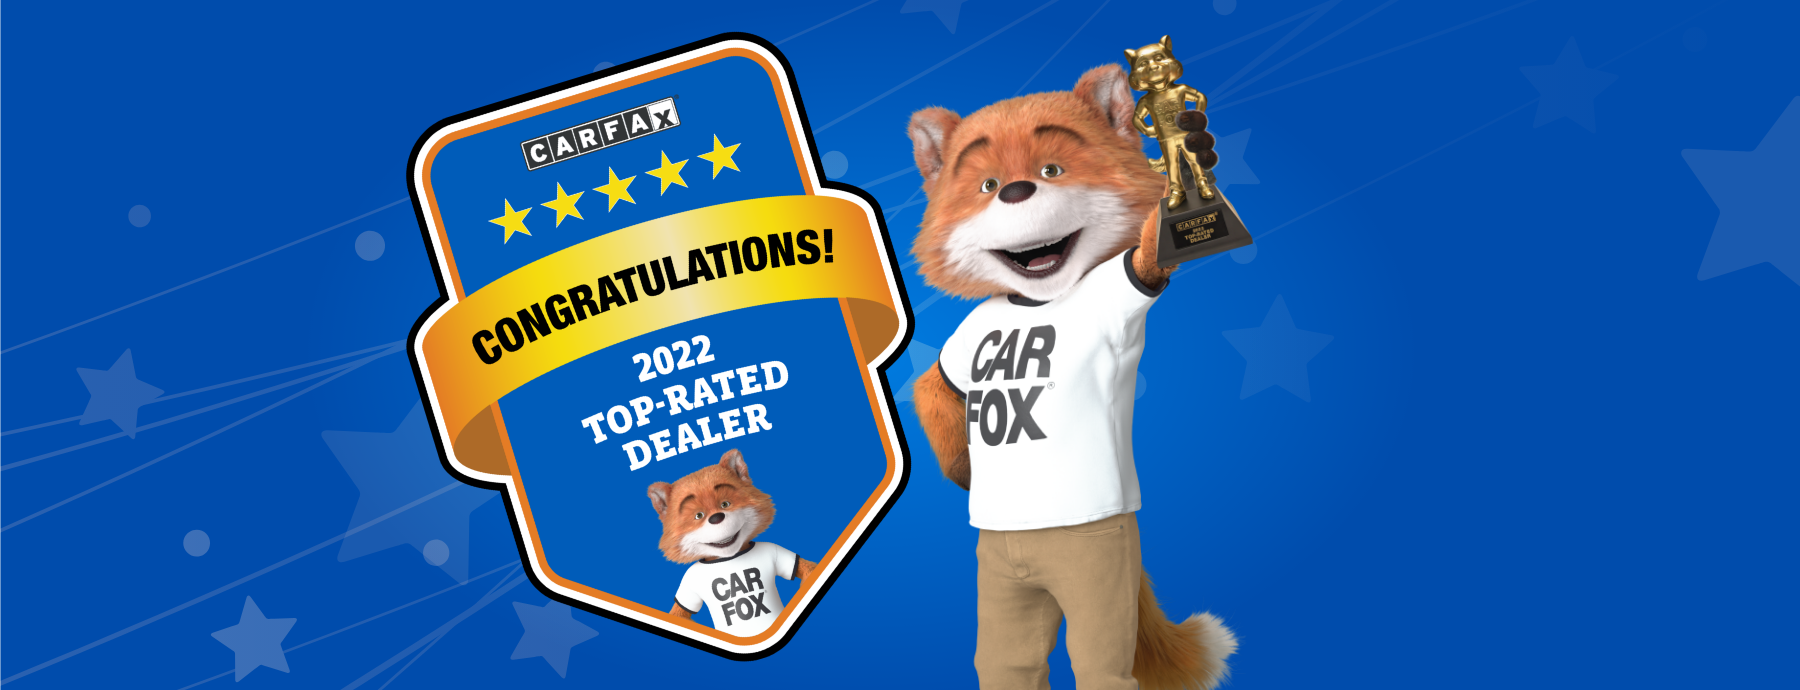 2021 CARFAX Top-Rated Dealer 